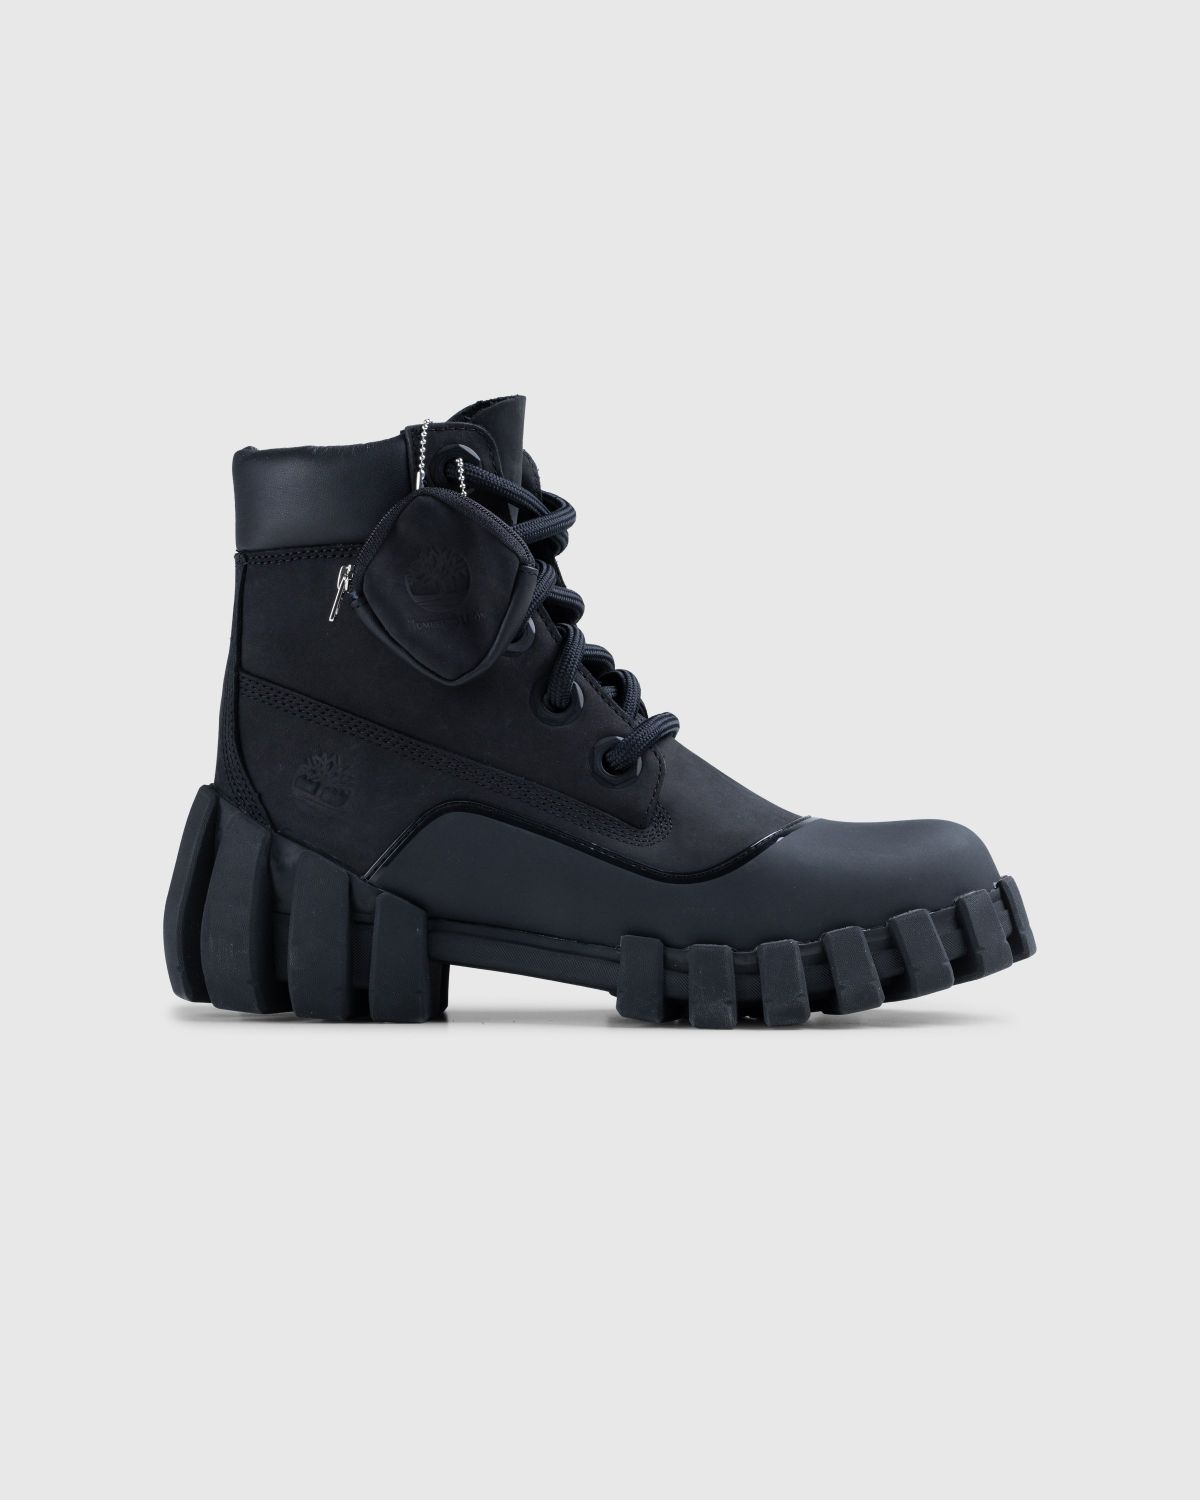 Timberland x Humberto Leon – 6 Inch Boot Black | Highsnobiety Shop